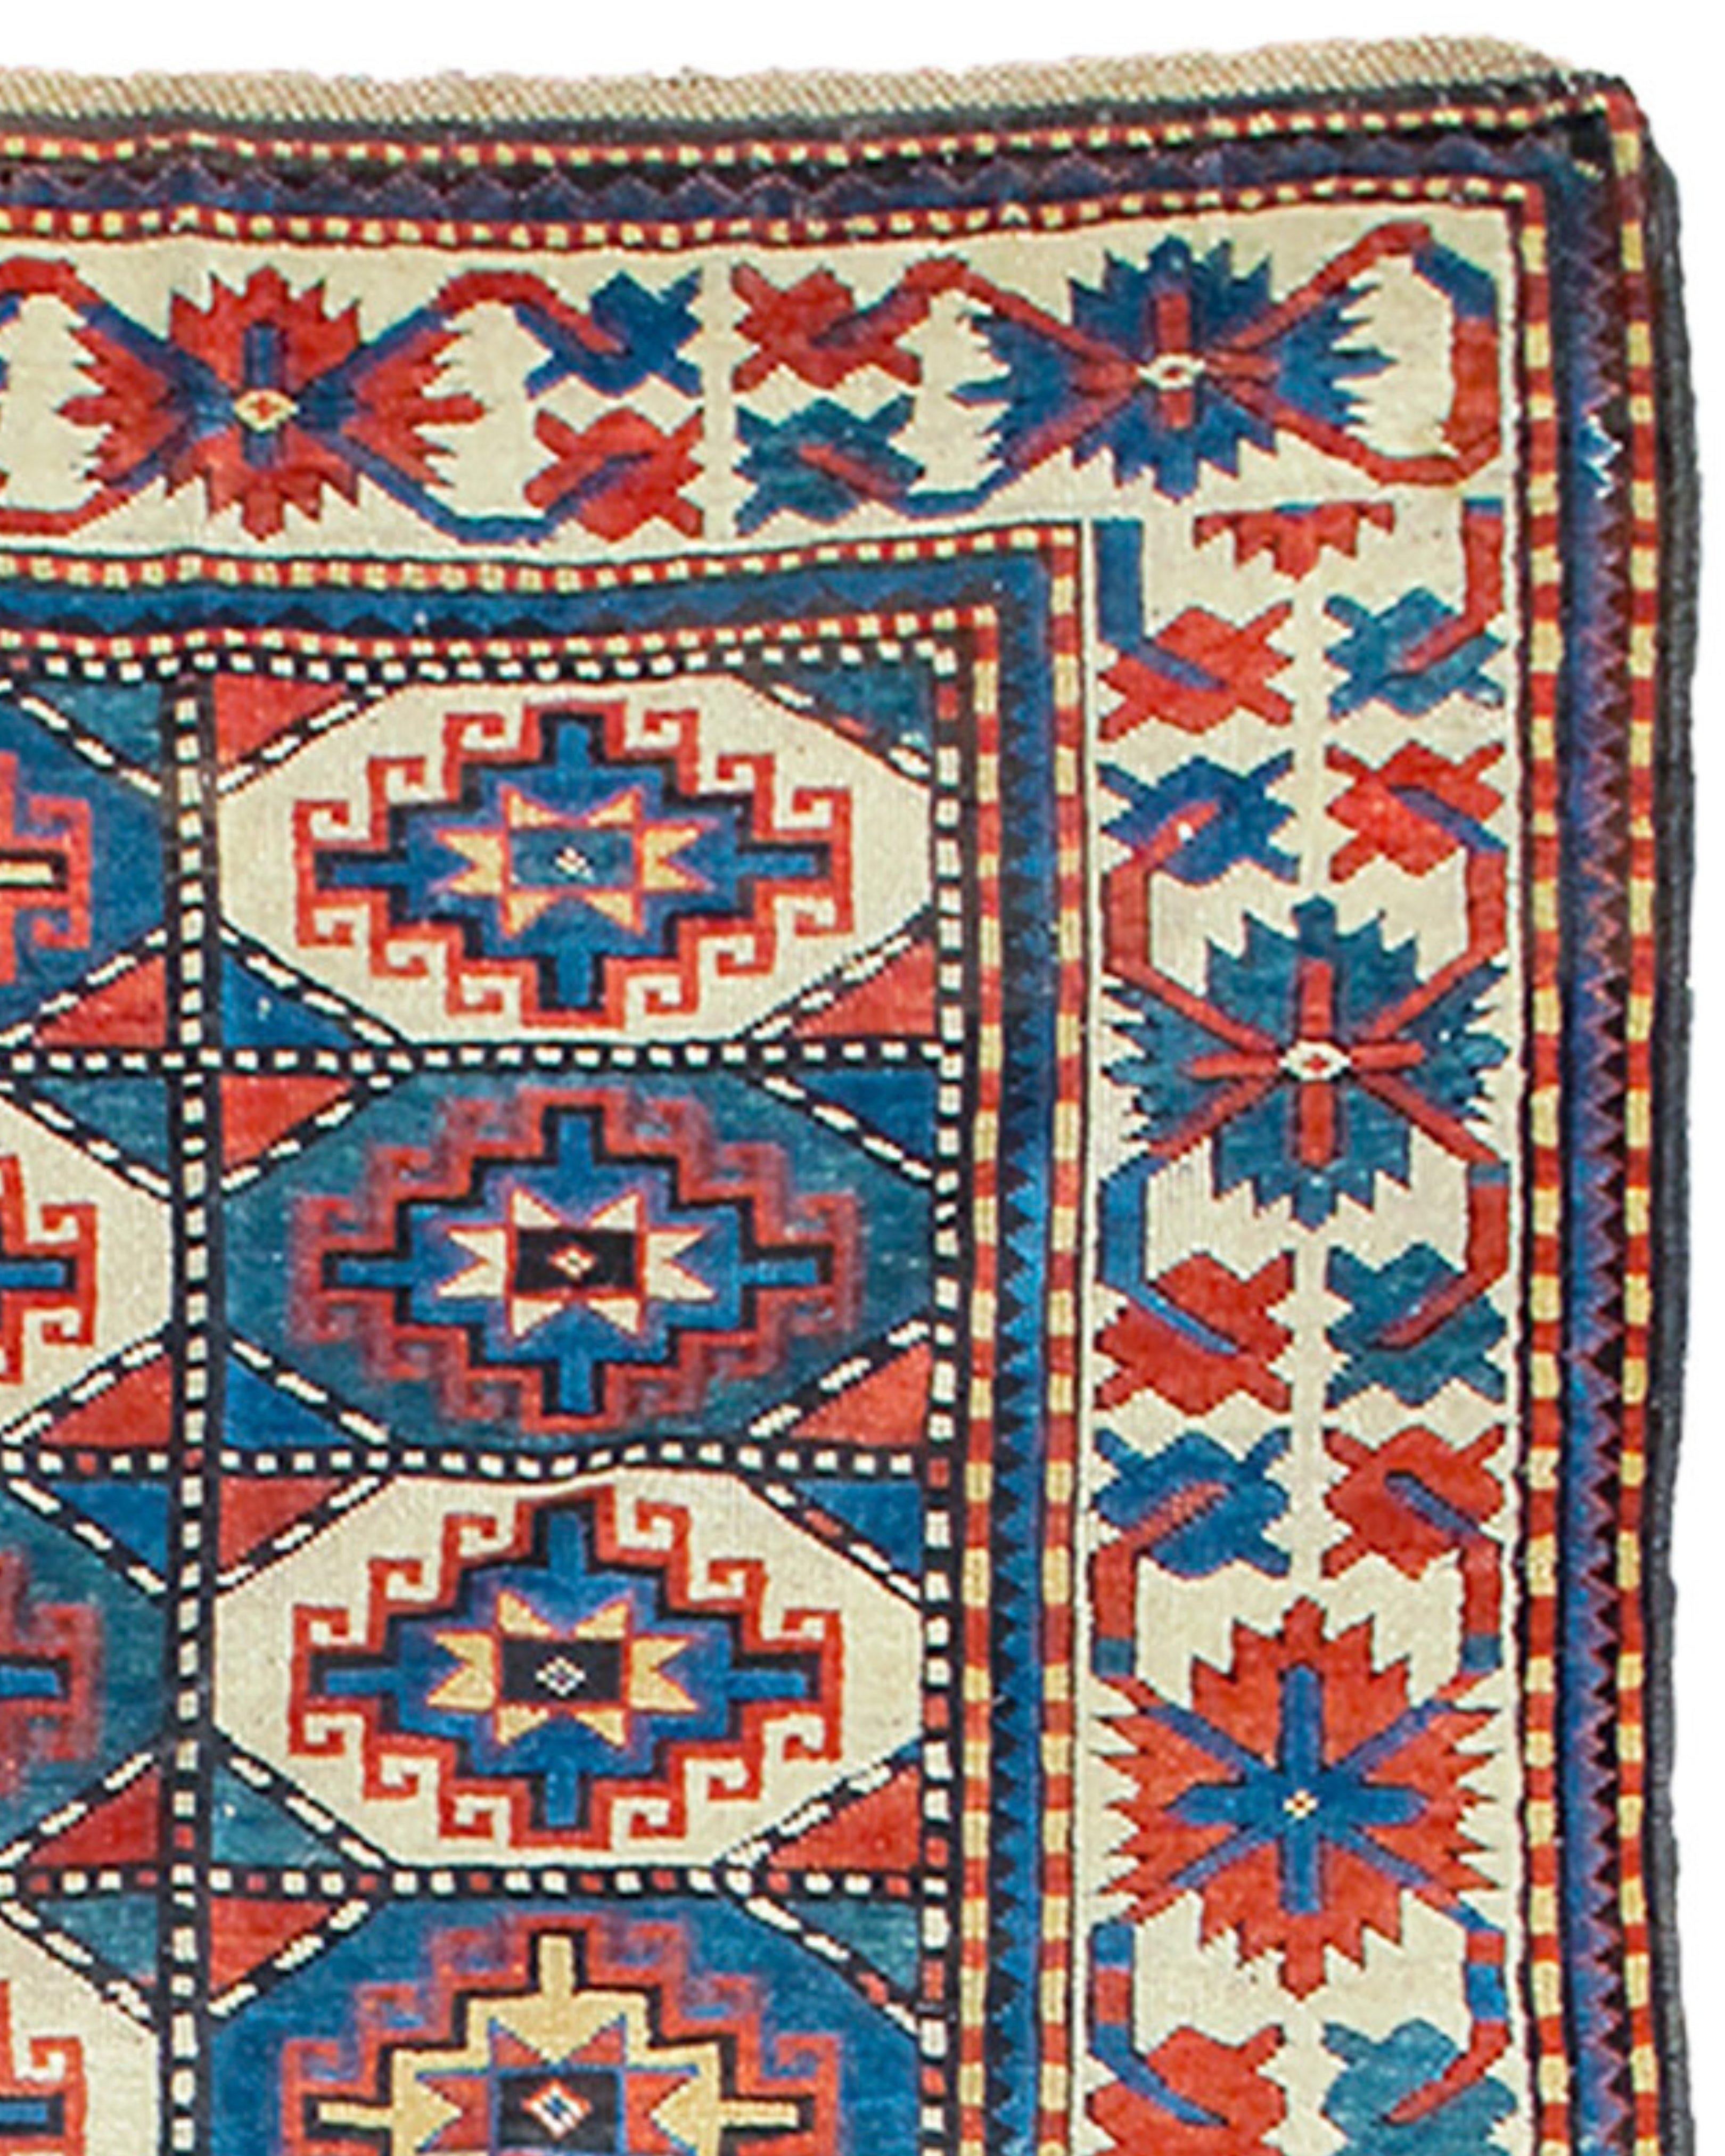 Antique Caucasian Karabagh Rug, 19th Century

Additional information:
Dimensions: 4'2